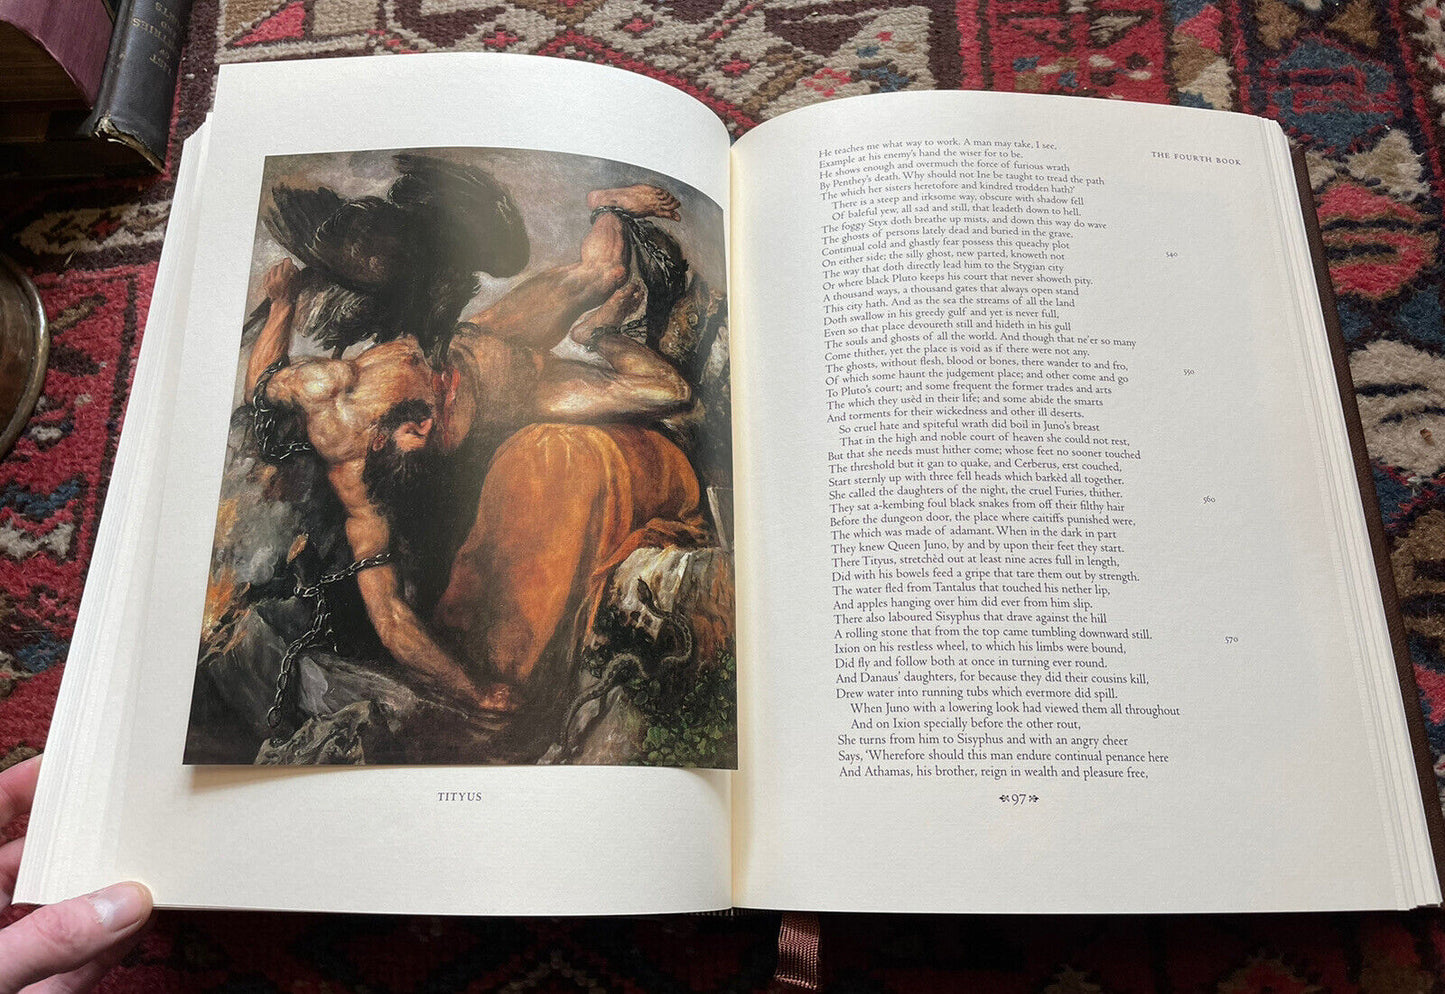 Ovid's Metamorphoses : Ltd Edition : Folio Society : Full Leather in Clamshell Box